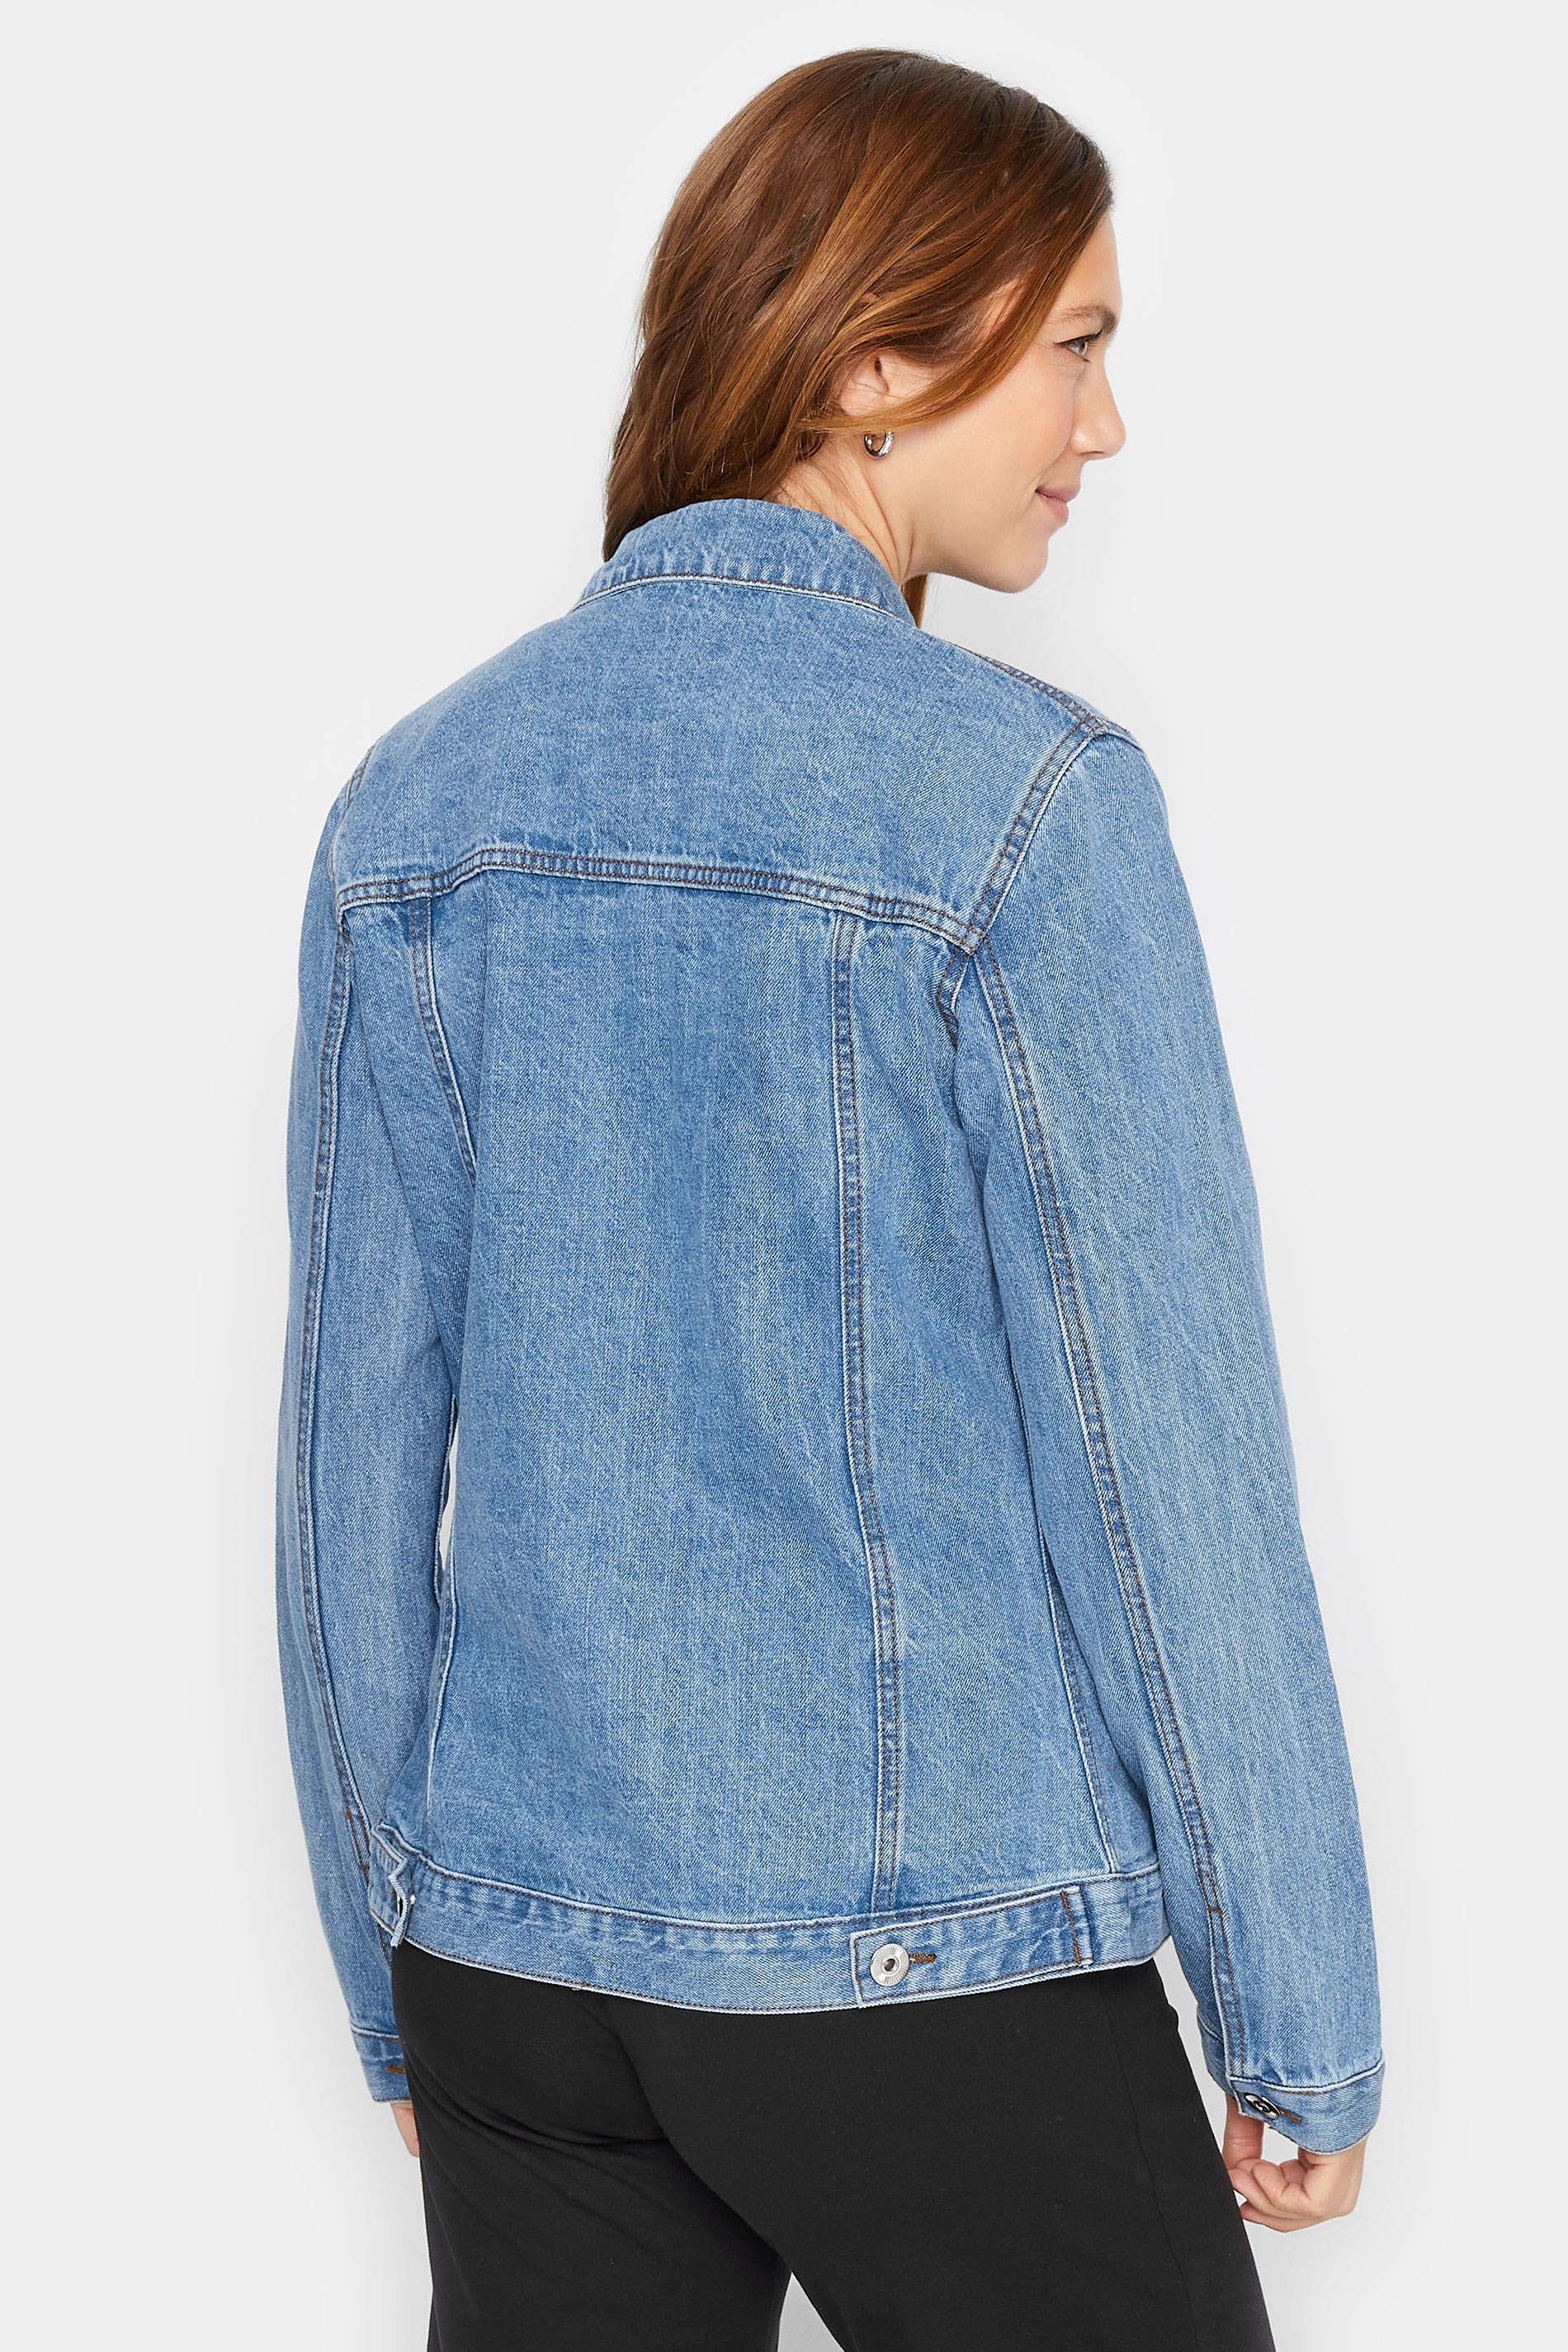 LTS Tall Women's Light Blue Washed Denim Jacket | Long Tall Sally 3